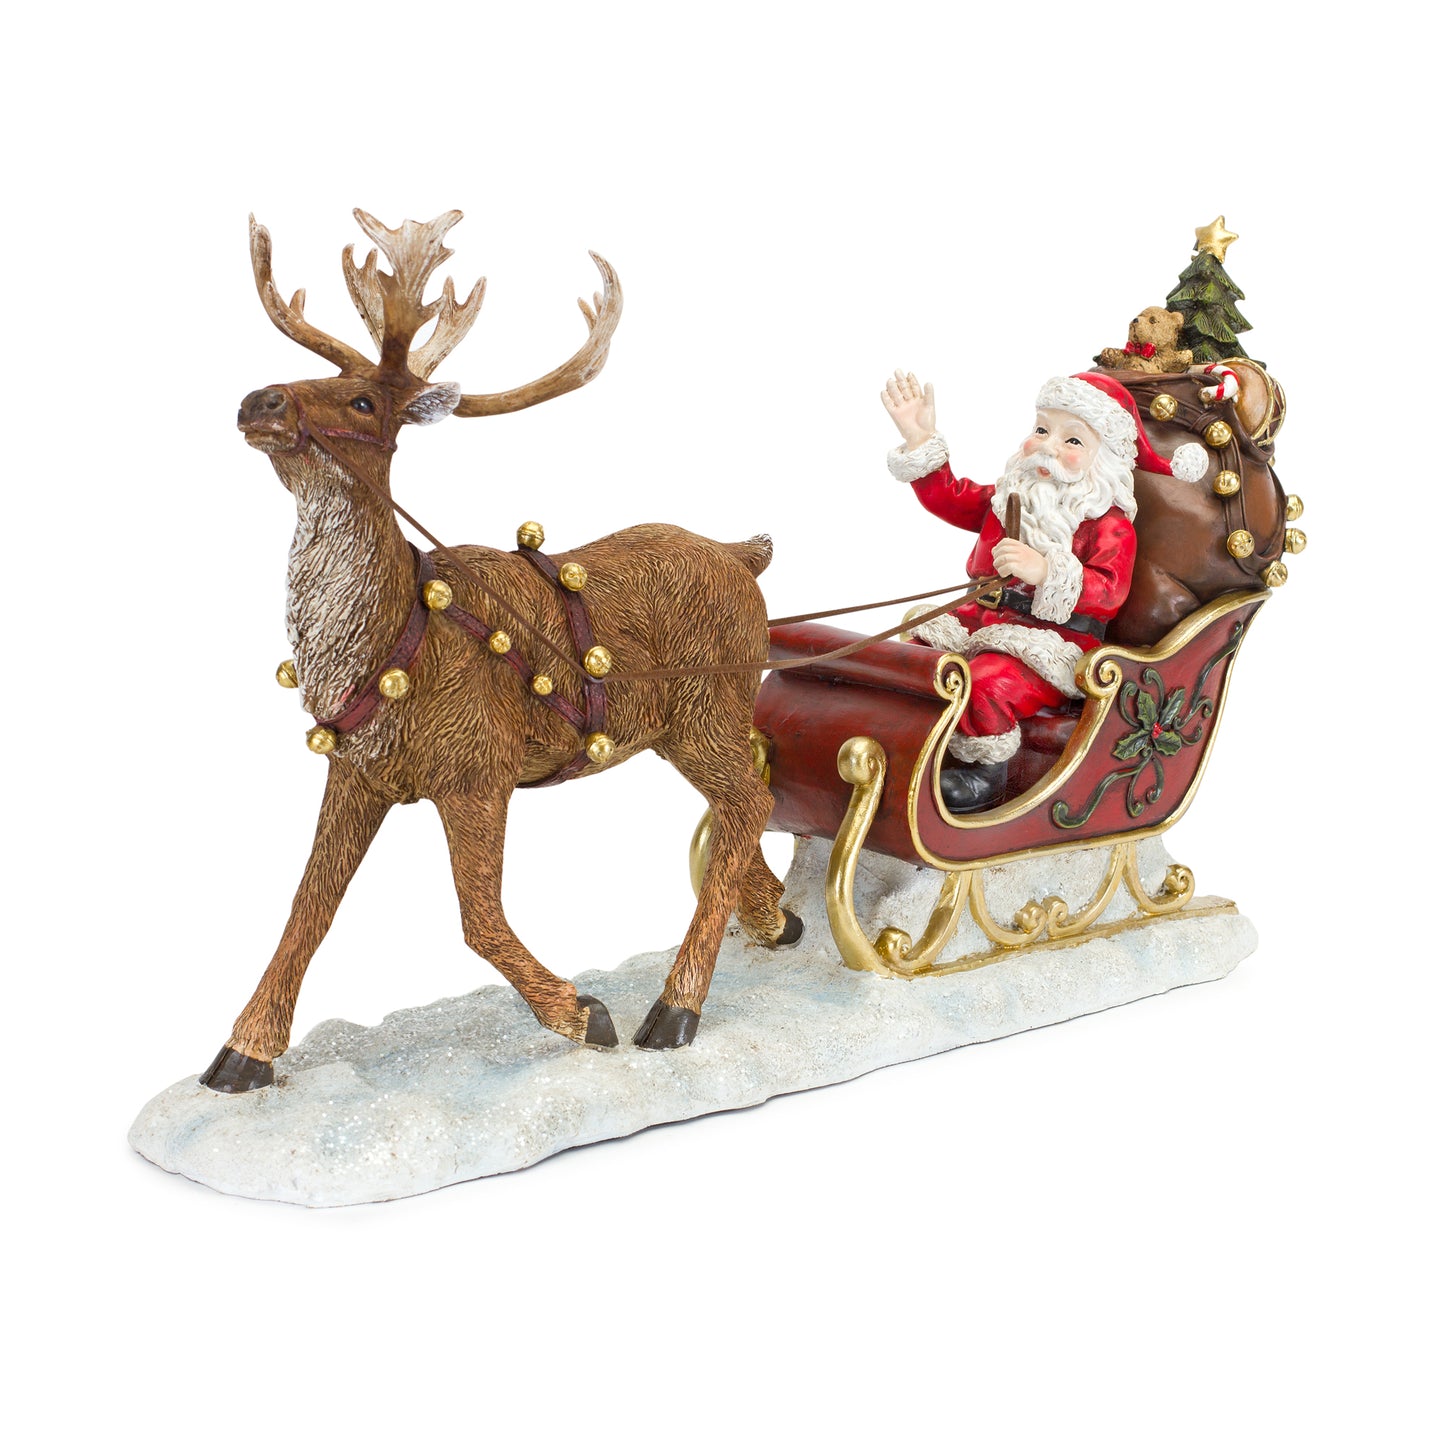 19"L x 10.75"H Resin Santa w/Sleigh and Deer Figurine